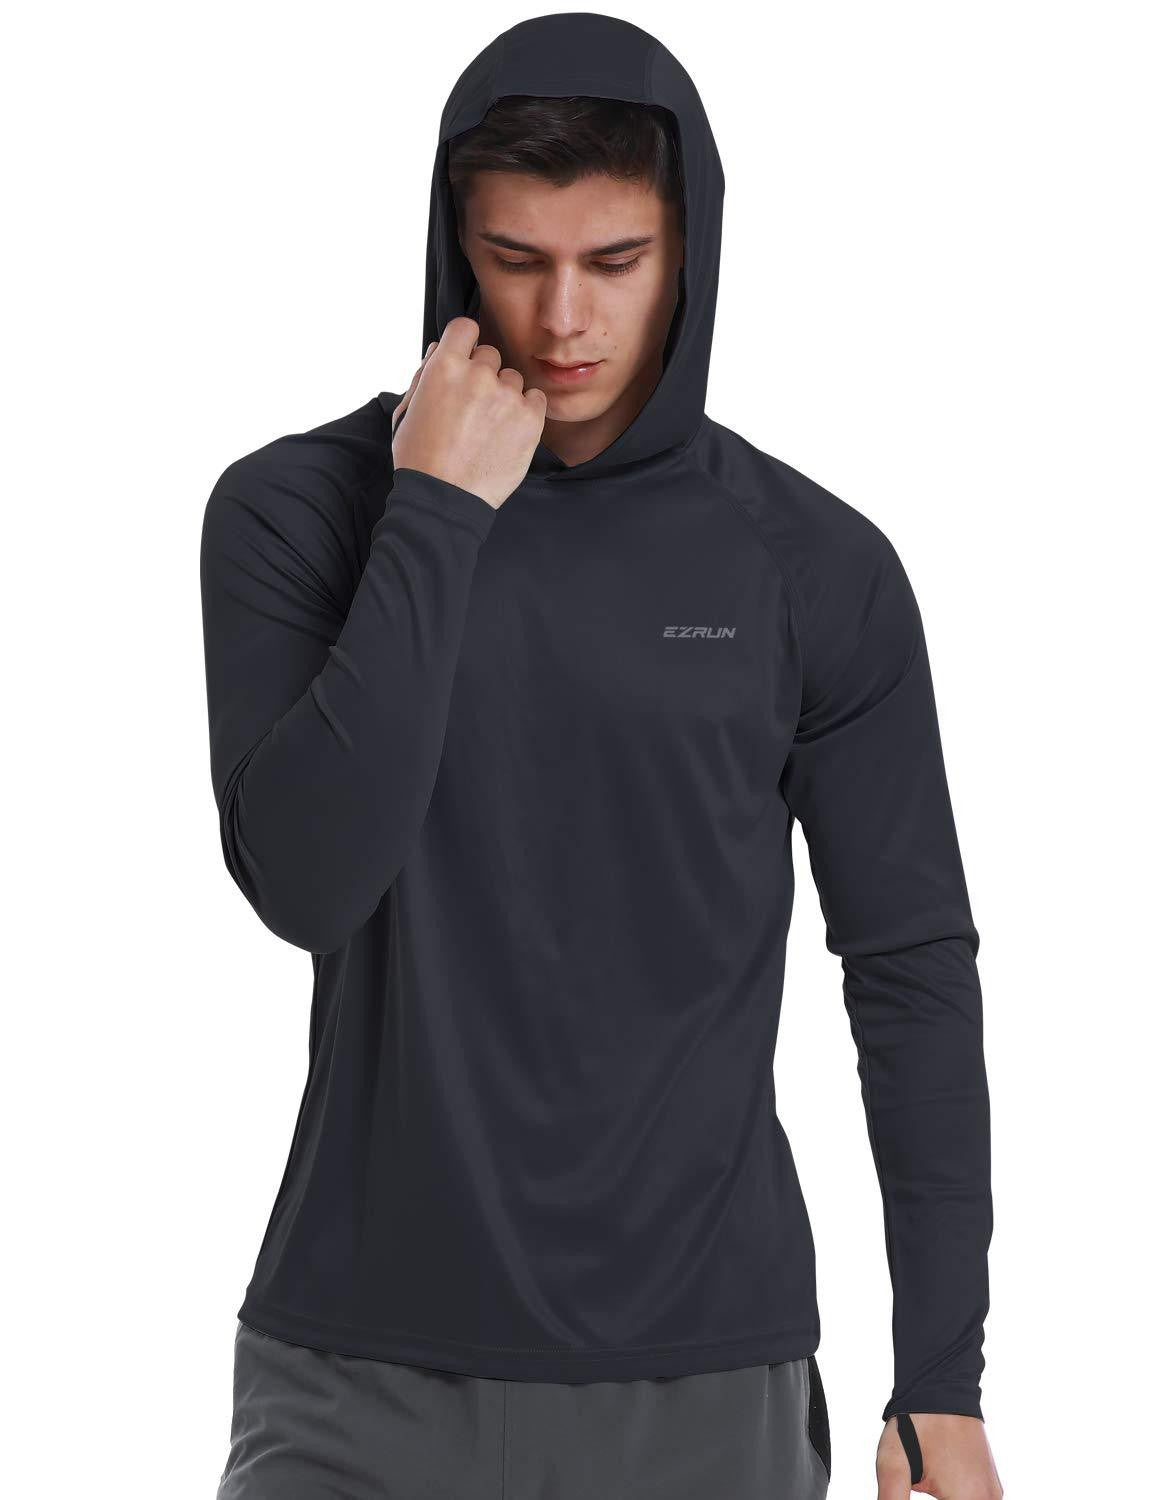 Drifter Magnus Short-Sleeve Zip-Up Long Hooded Sweatshirt in Black for Men